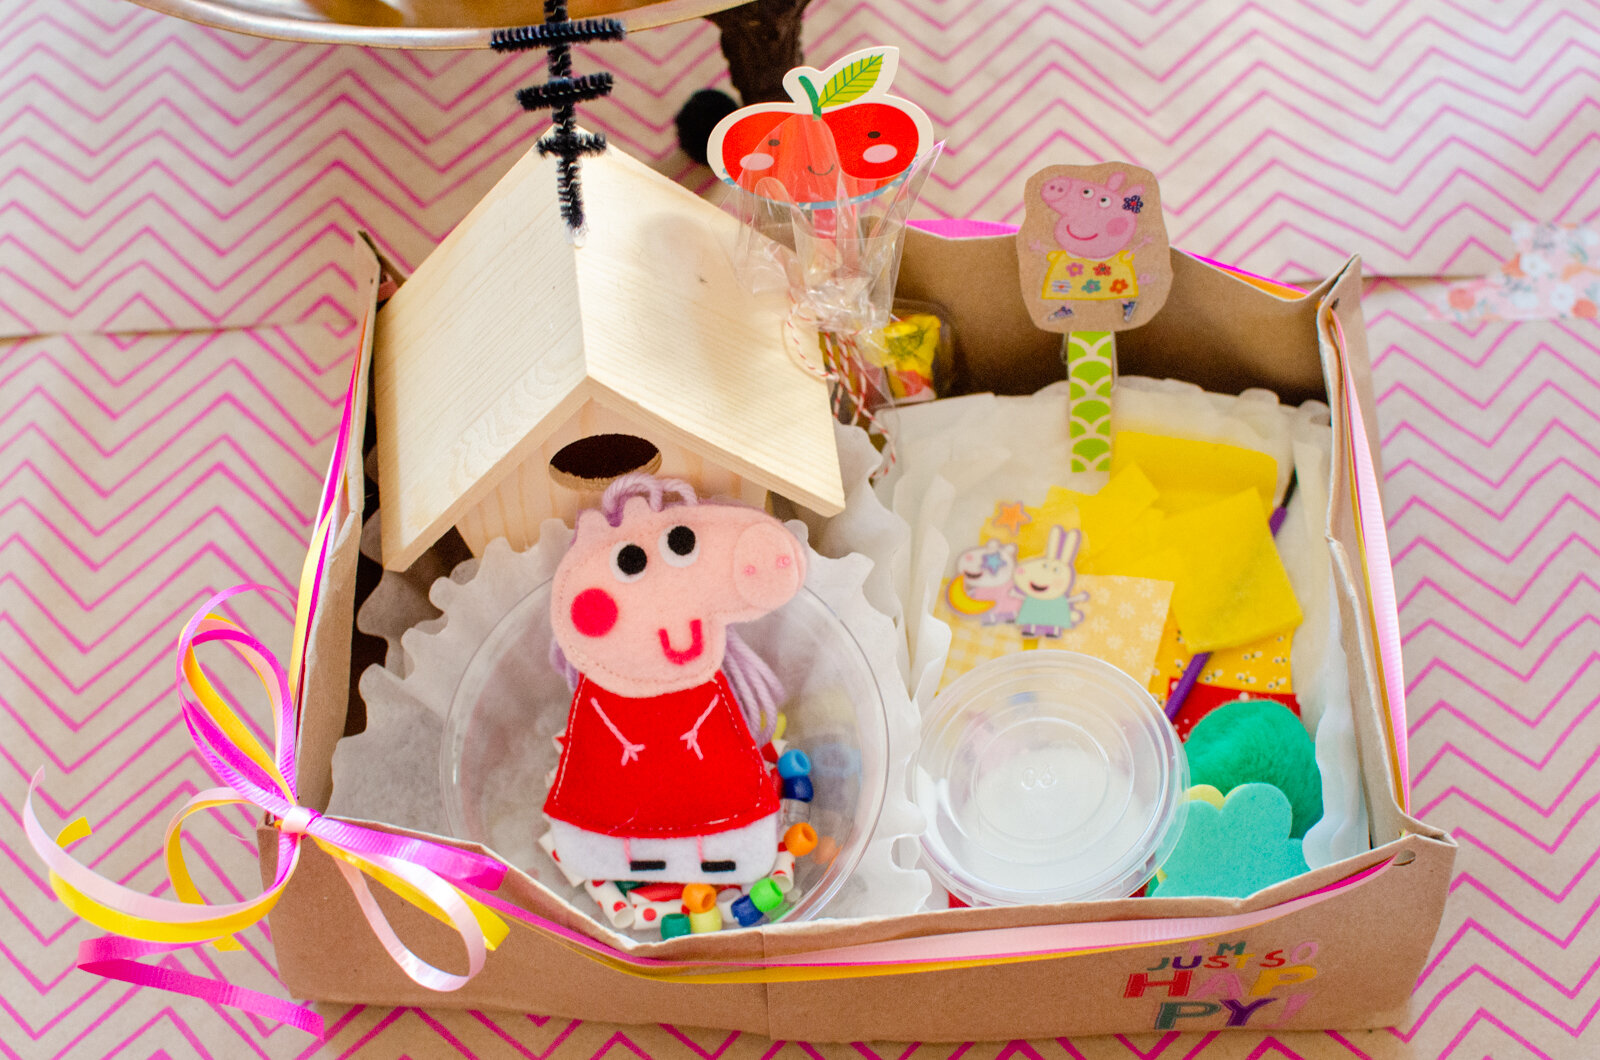 Peppa Pig House Favor Box - Custom Embellished Design – Funfetti